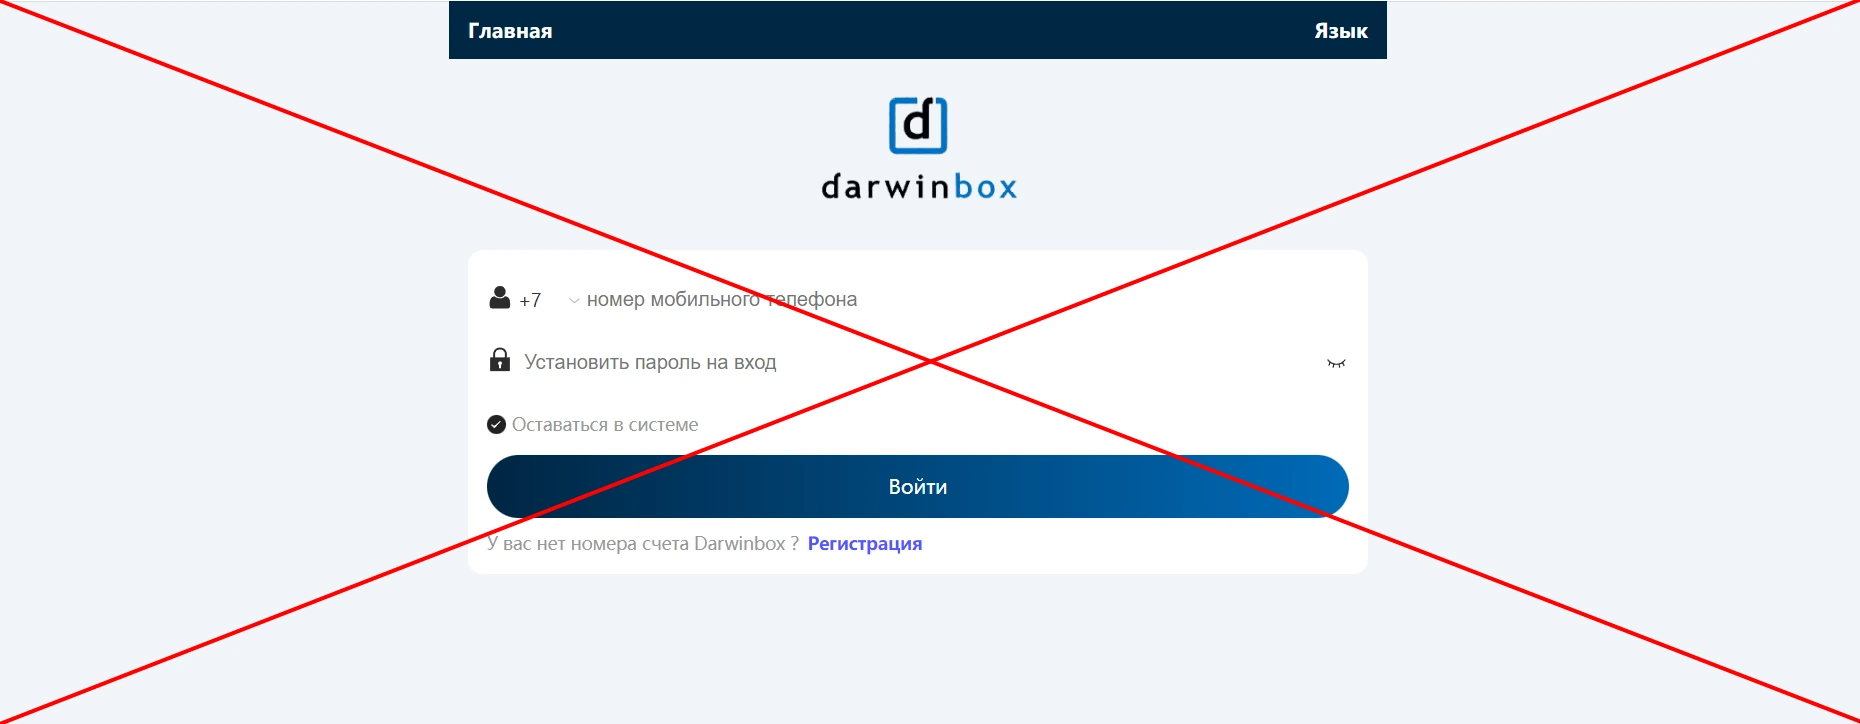 Darwinbox - отзывы о работе. Сайт компании darwinbox.works